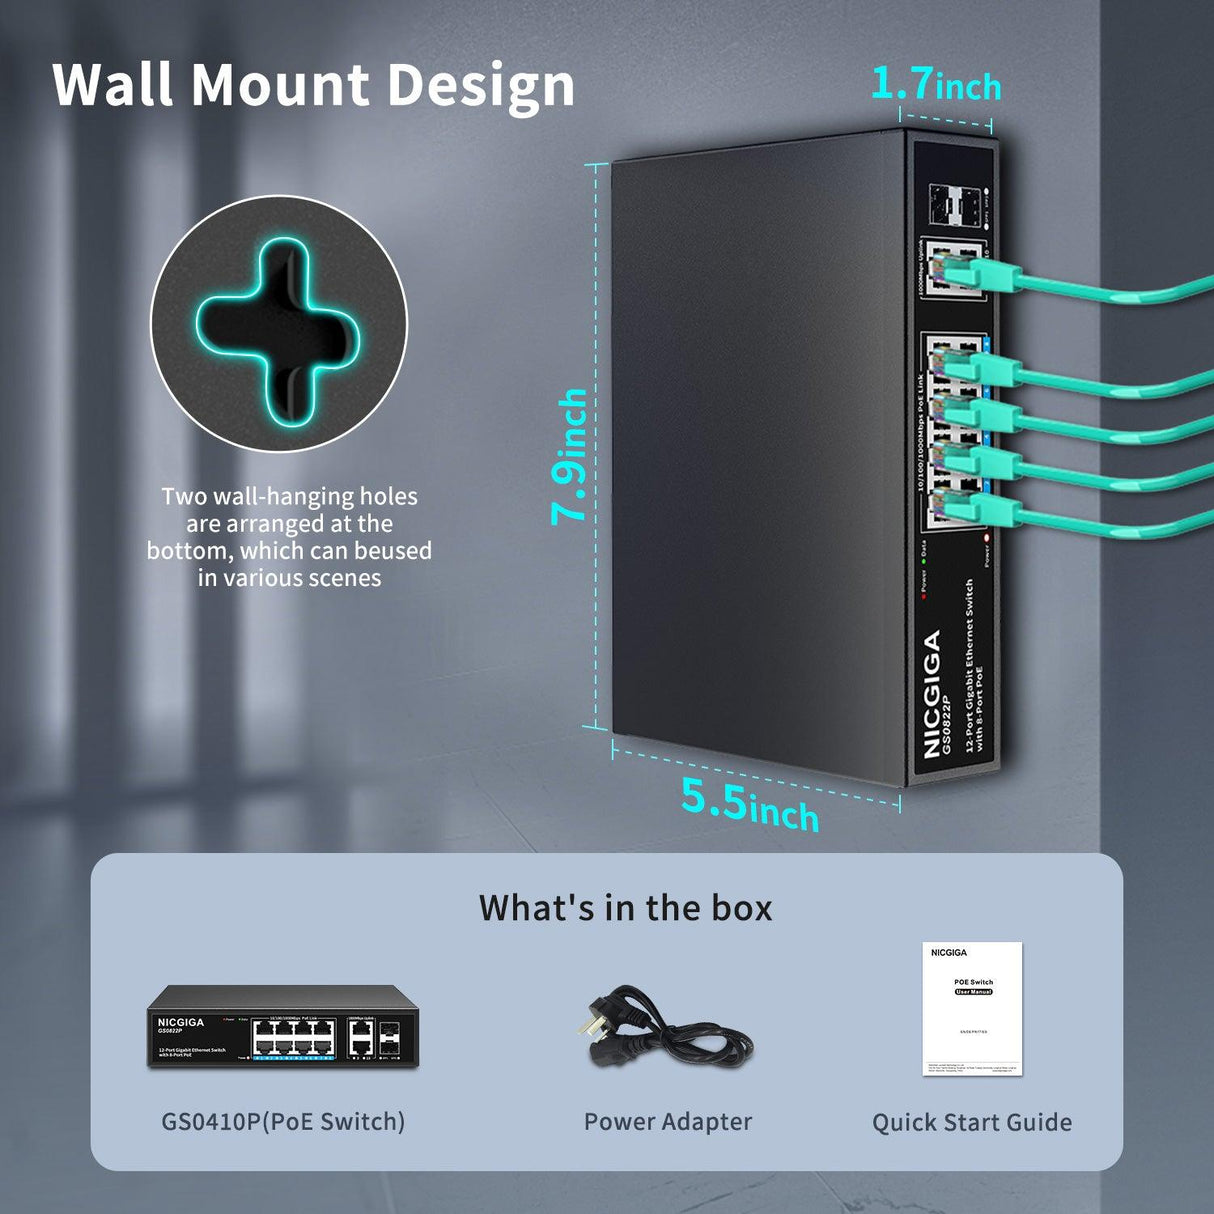 8 Port Gigabit PoE Switch Unmanaged with 8 Port IEEE802.3af/at PoE+@120W, 2 x 1000Mbps Uplink + 2 x 1G SFP, 12 Port Network Power Over Ethernet Switch, Desktop/Wall-Mount. - NICGIGA